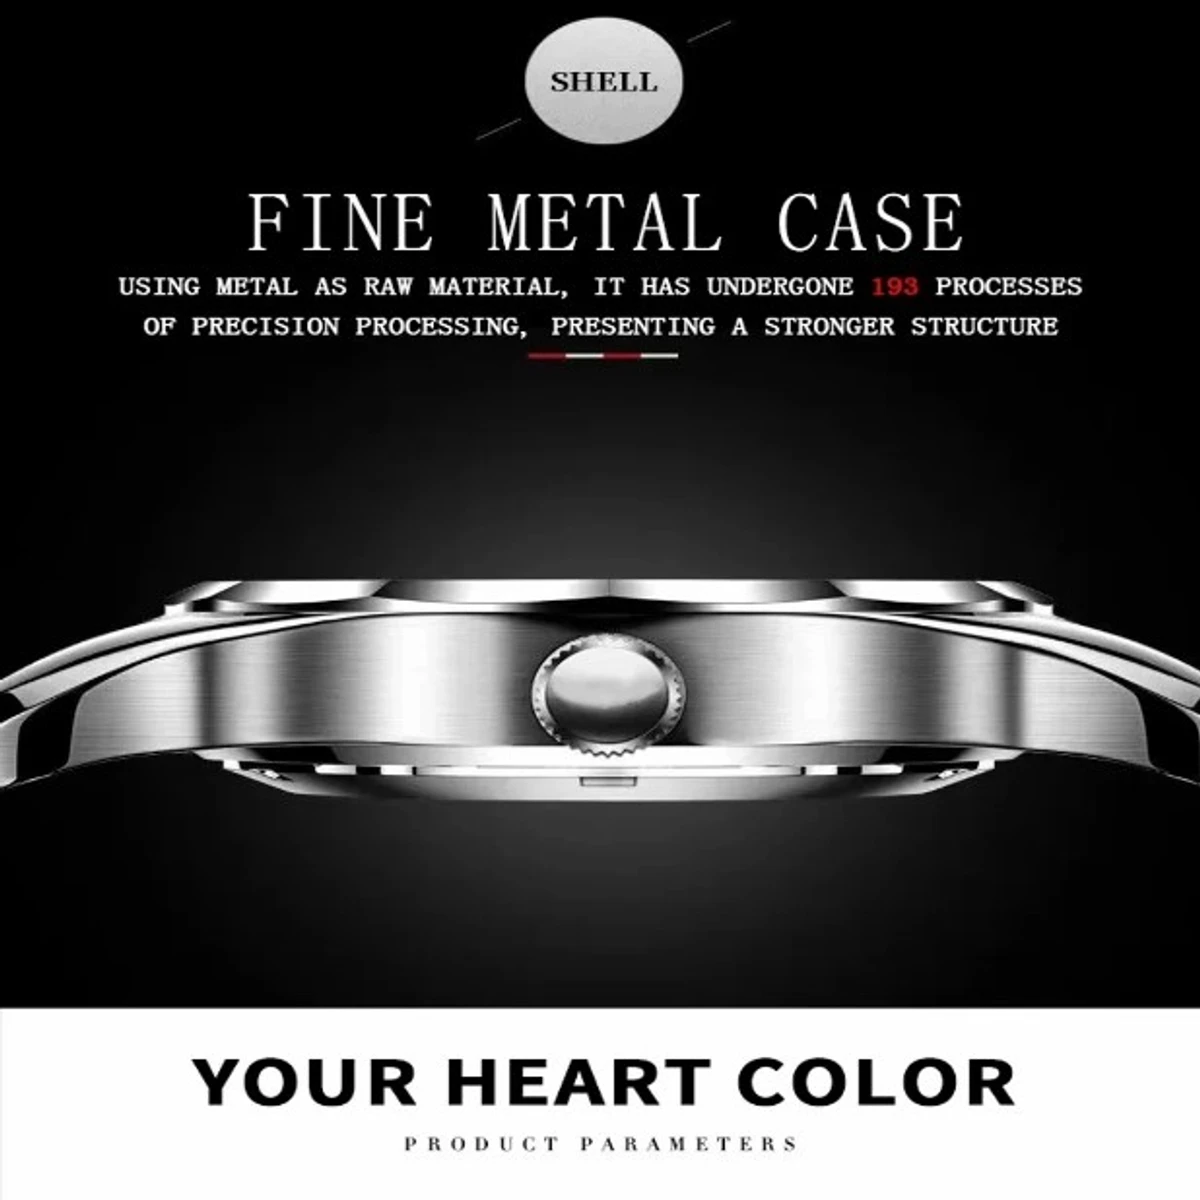 2023 New Luxury Binbond Brand Men's Luminous Watches Stainless Steel Waterproof Chronograph watch - Toton ar dial blue